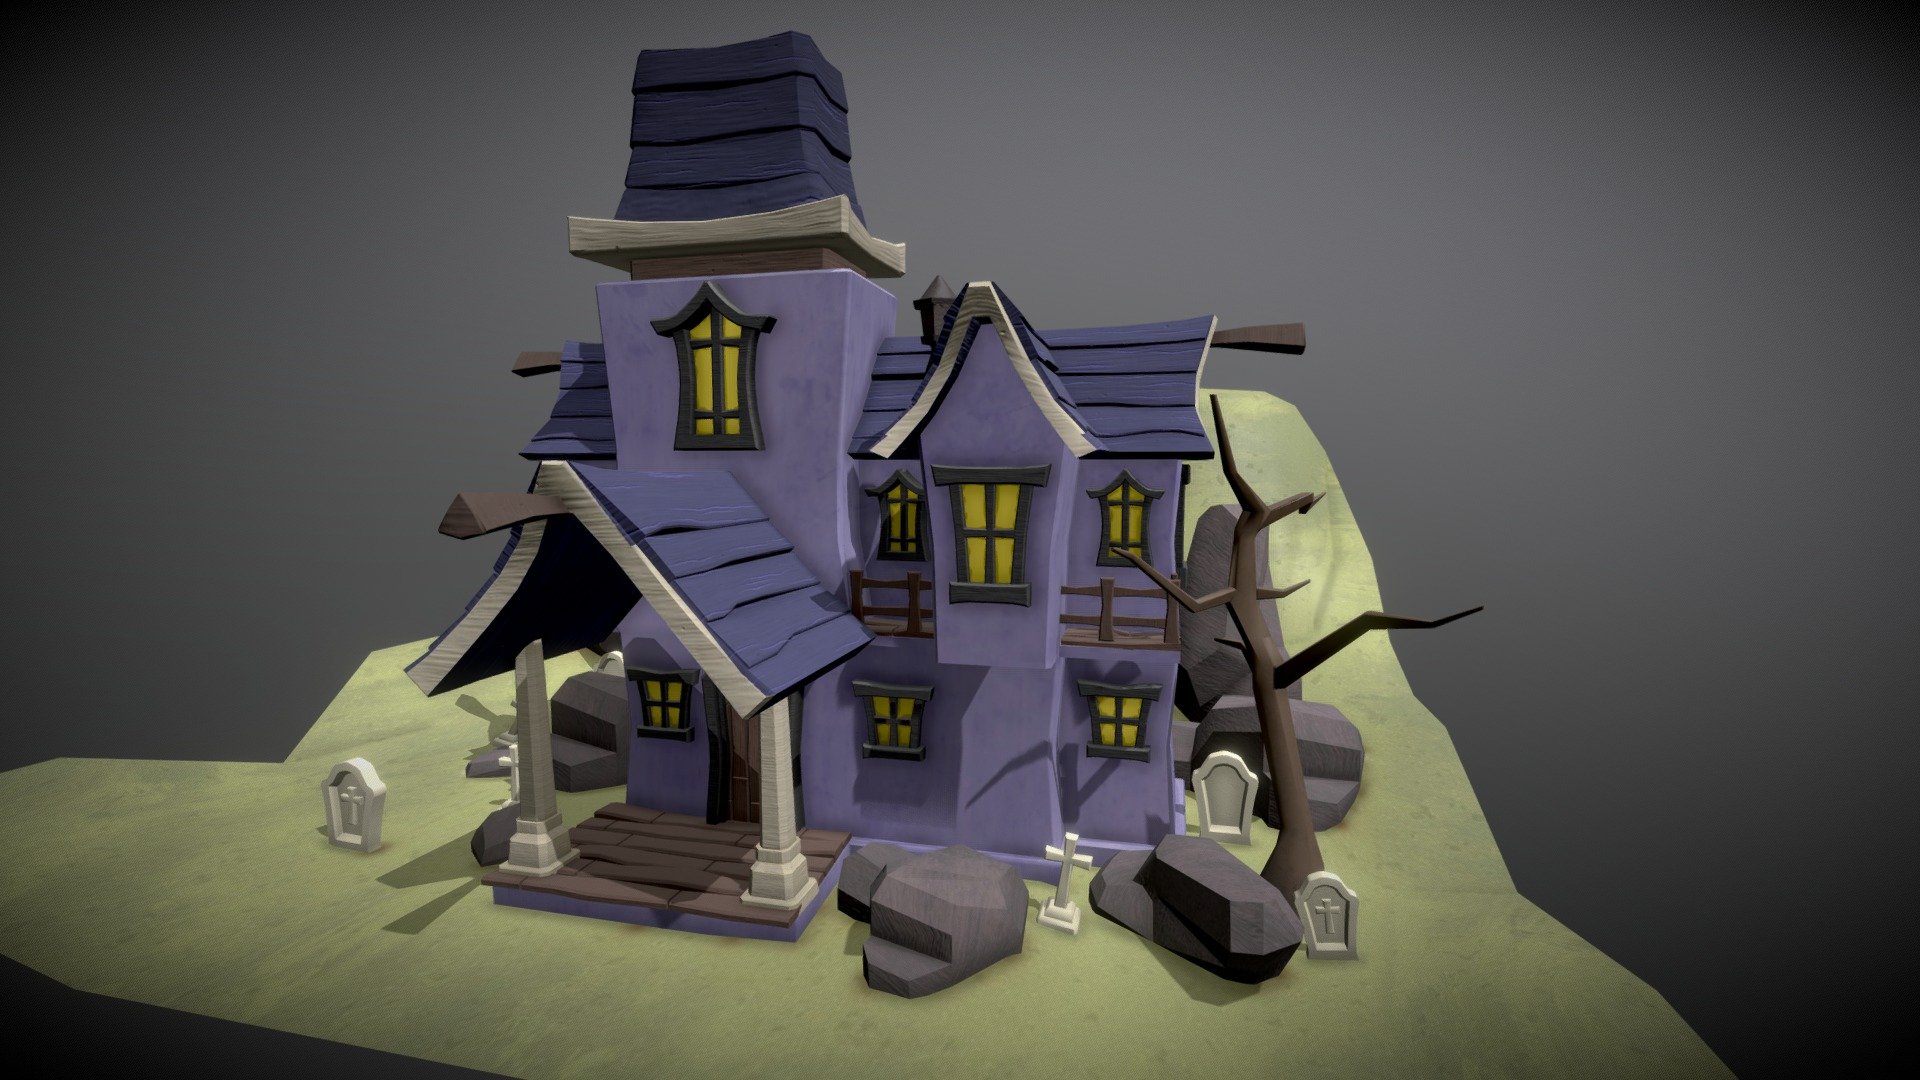 A spooky Haunted House for Halloween - Stylized Haunted House - 3D model by Fleur Leuverink (@FleurLeuverink) 3d model